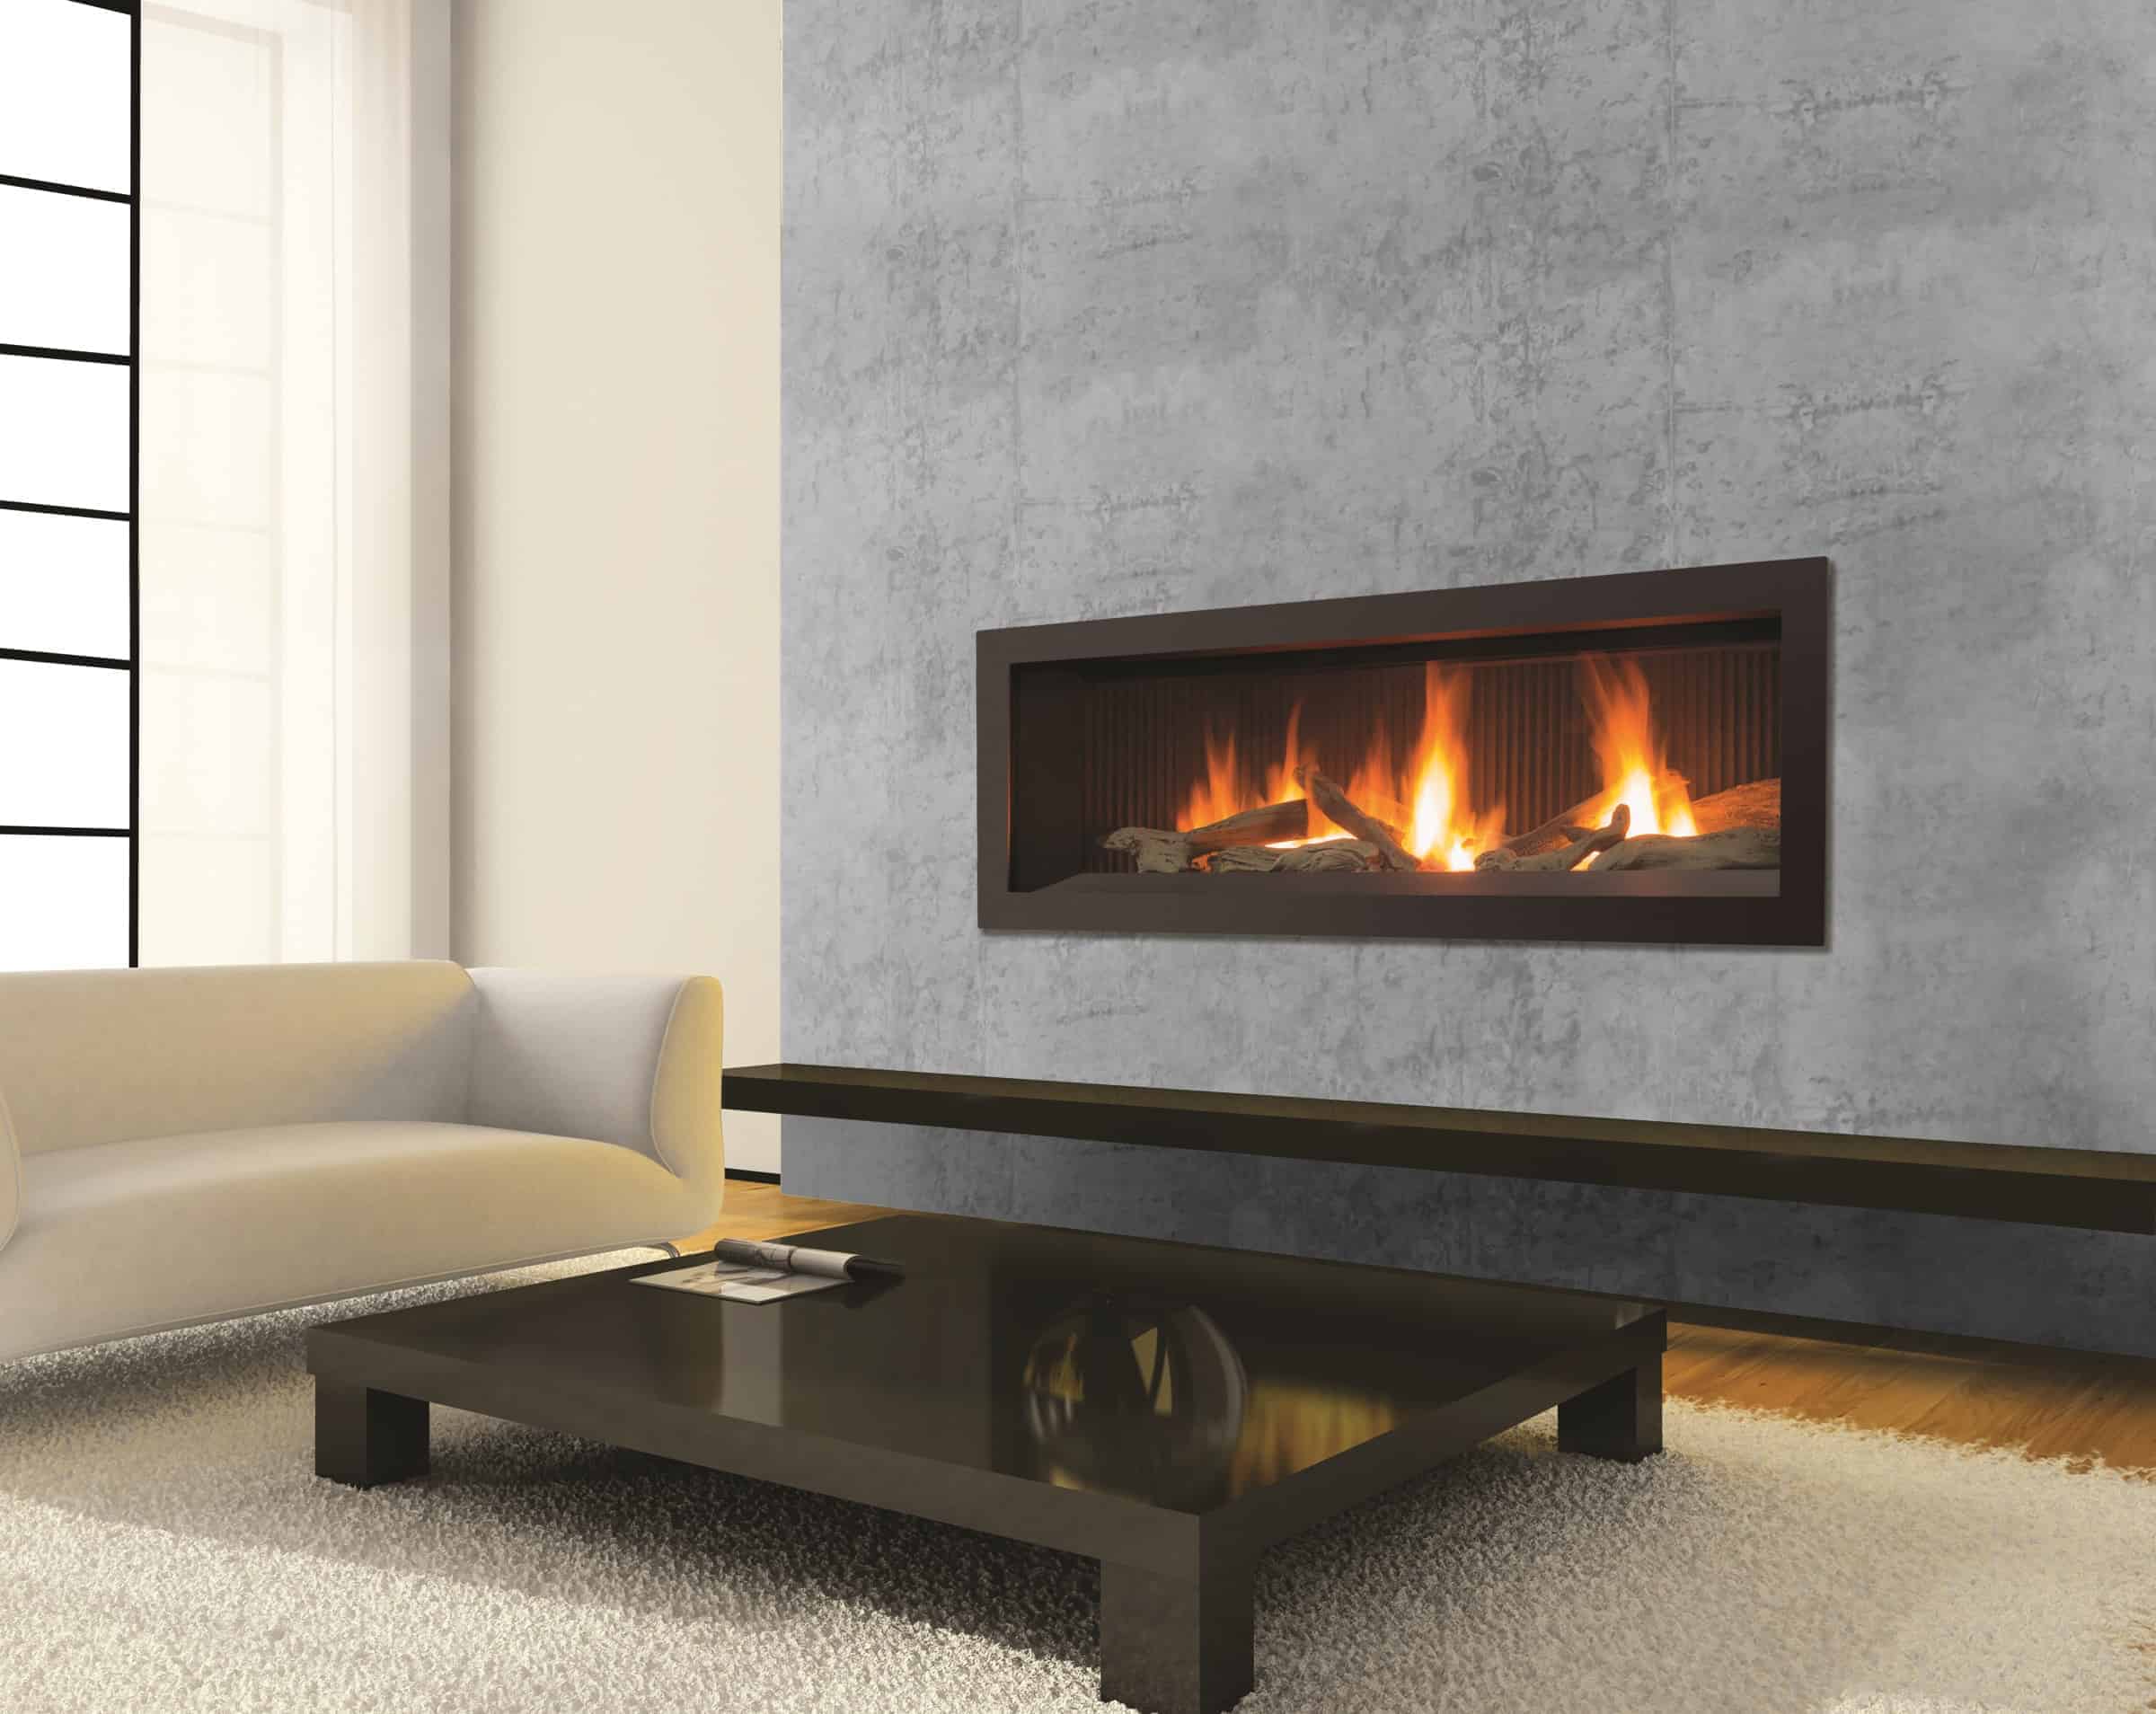 C44 powder coated surround room image on safe home fireplace website